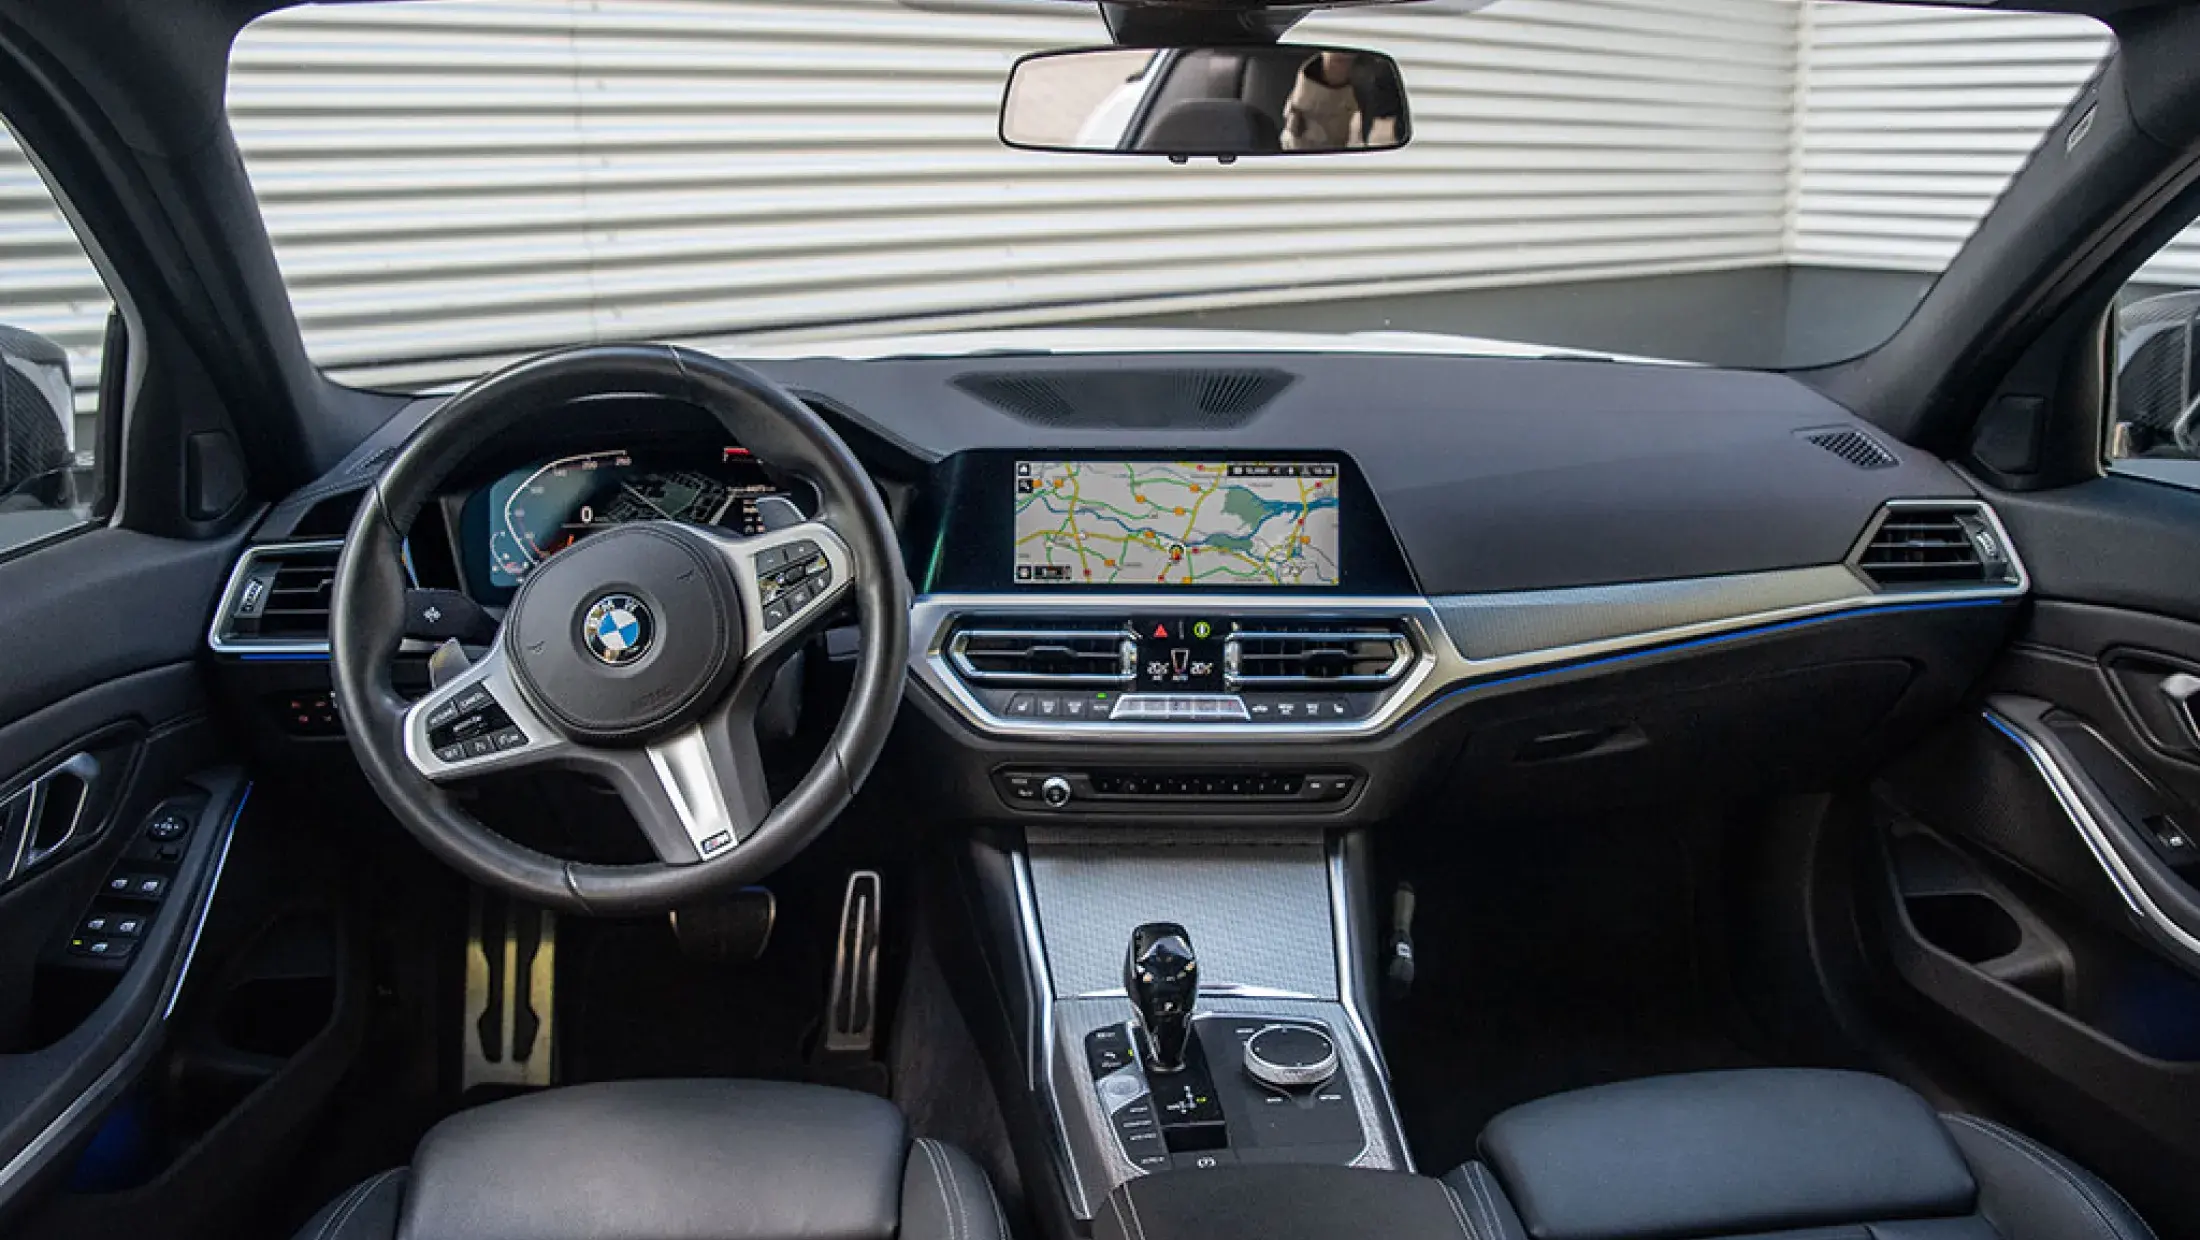 BMW 330i High Executive M-Performance Alpinweiss III G20 Bergwerff